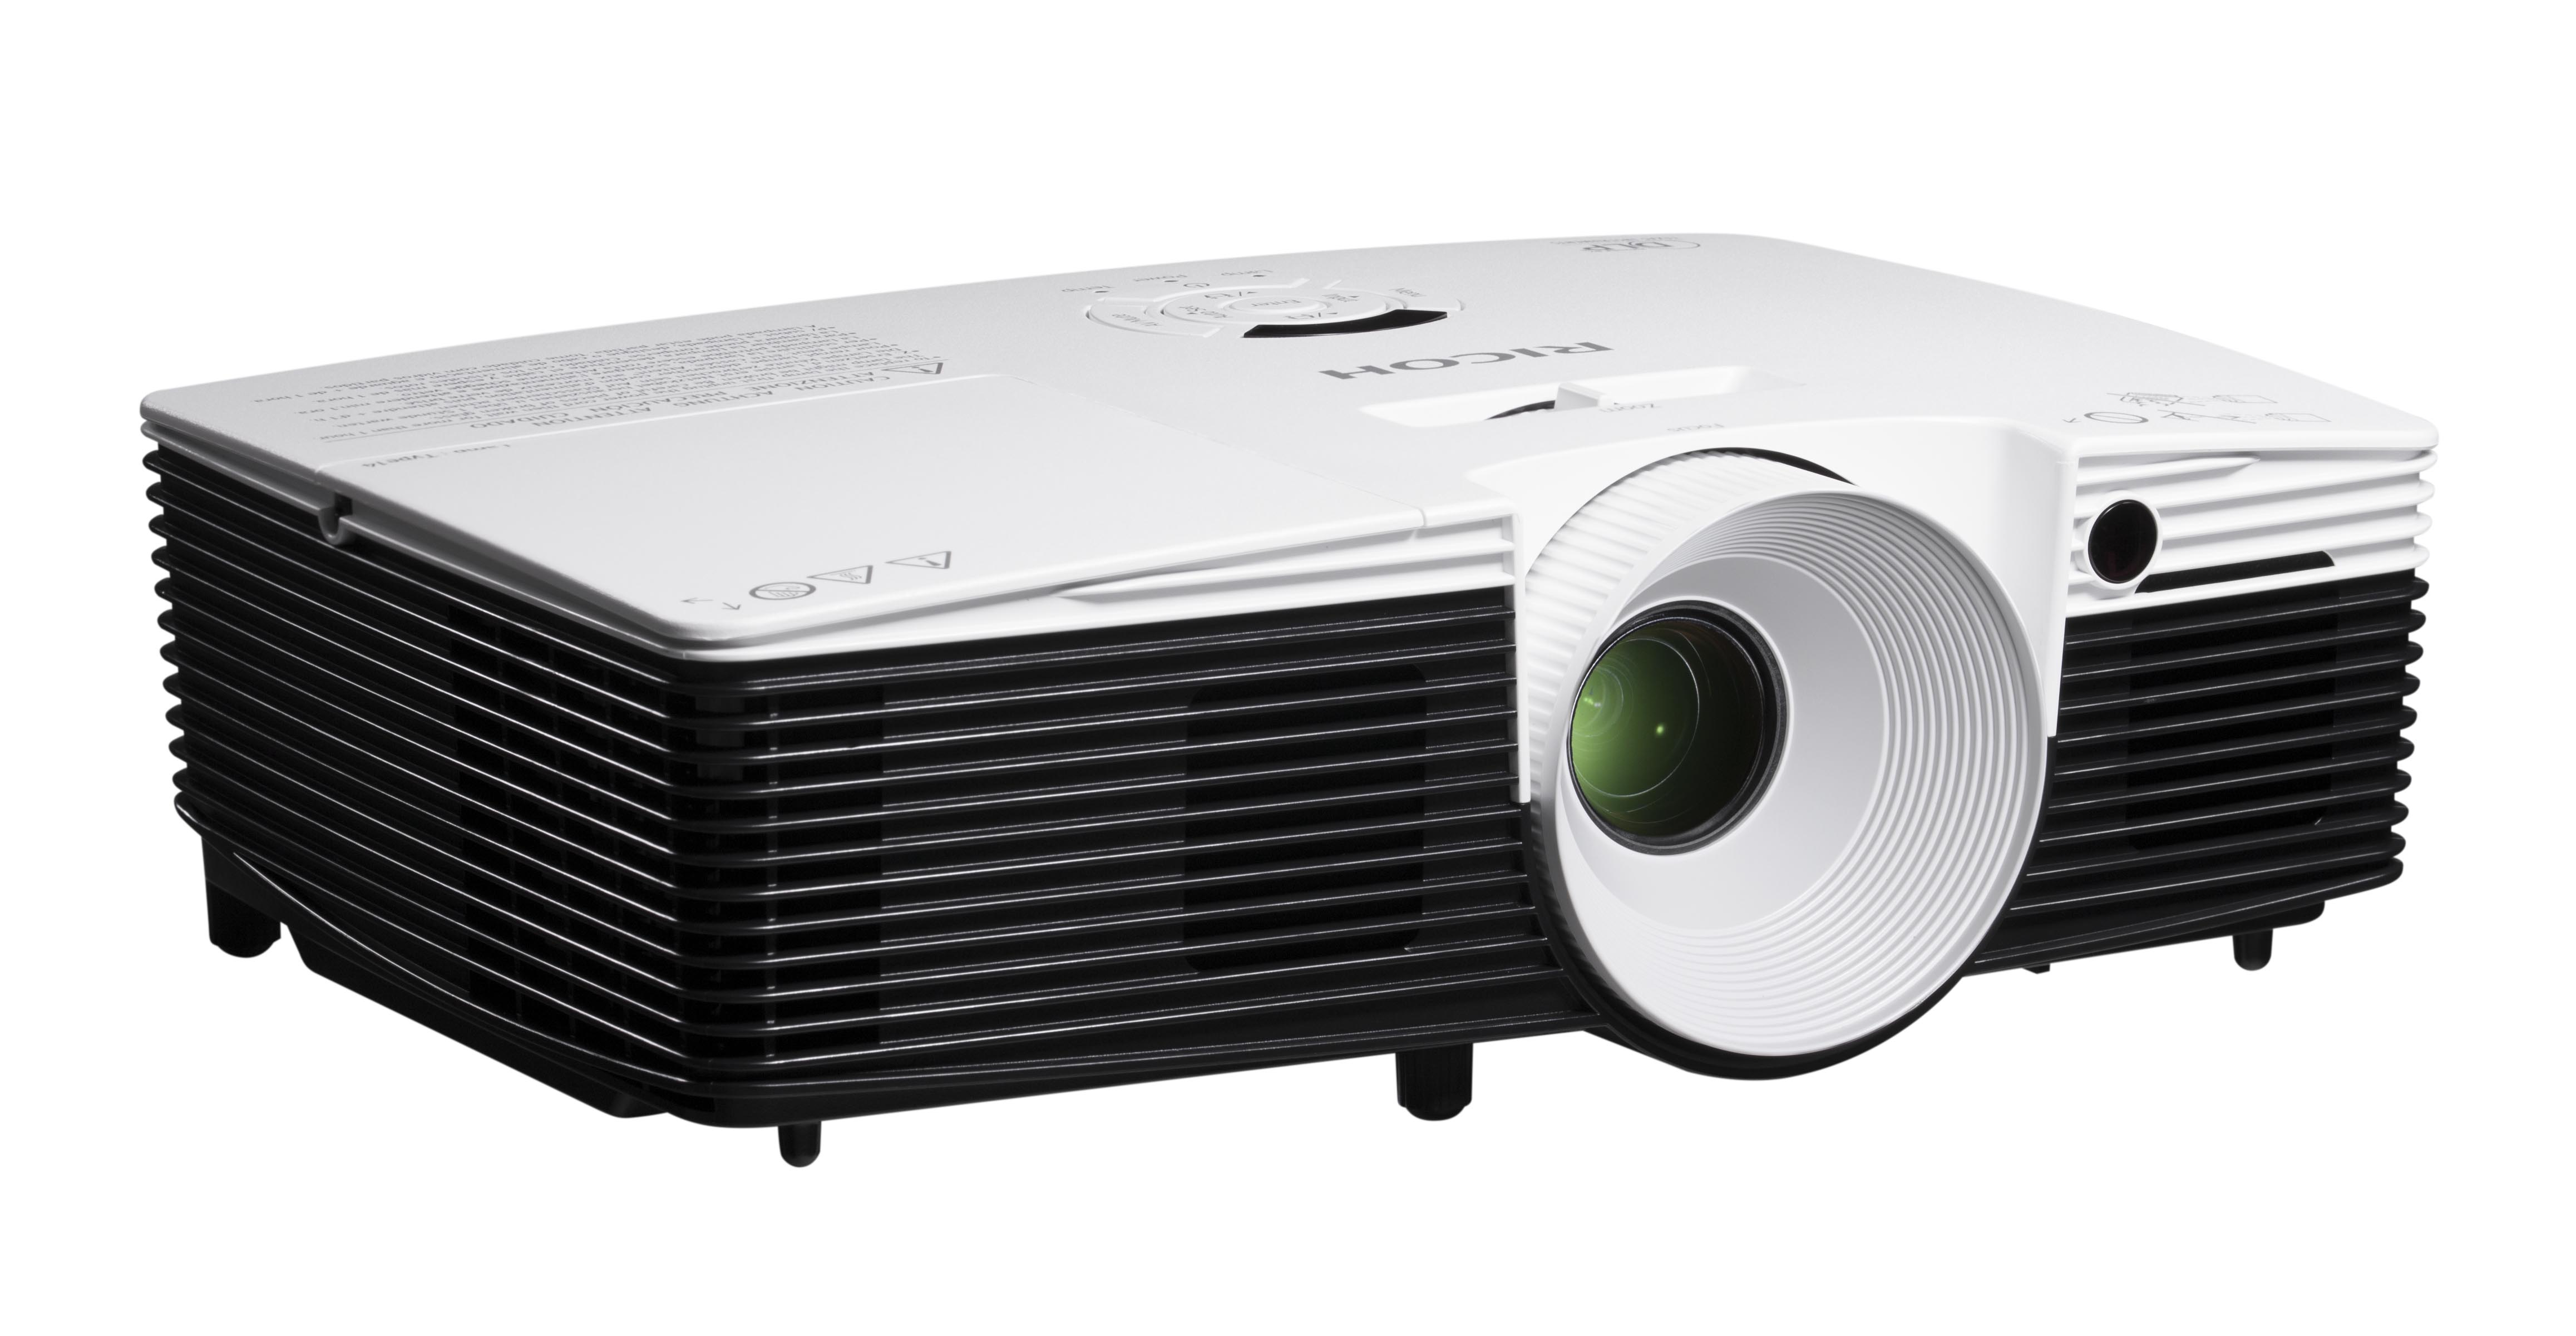 Infocomm 2015 – Ricoh Announces 10 New Projectors! – Projector Reviews